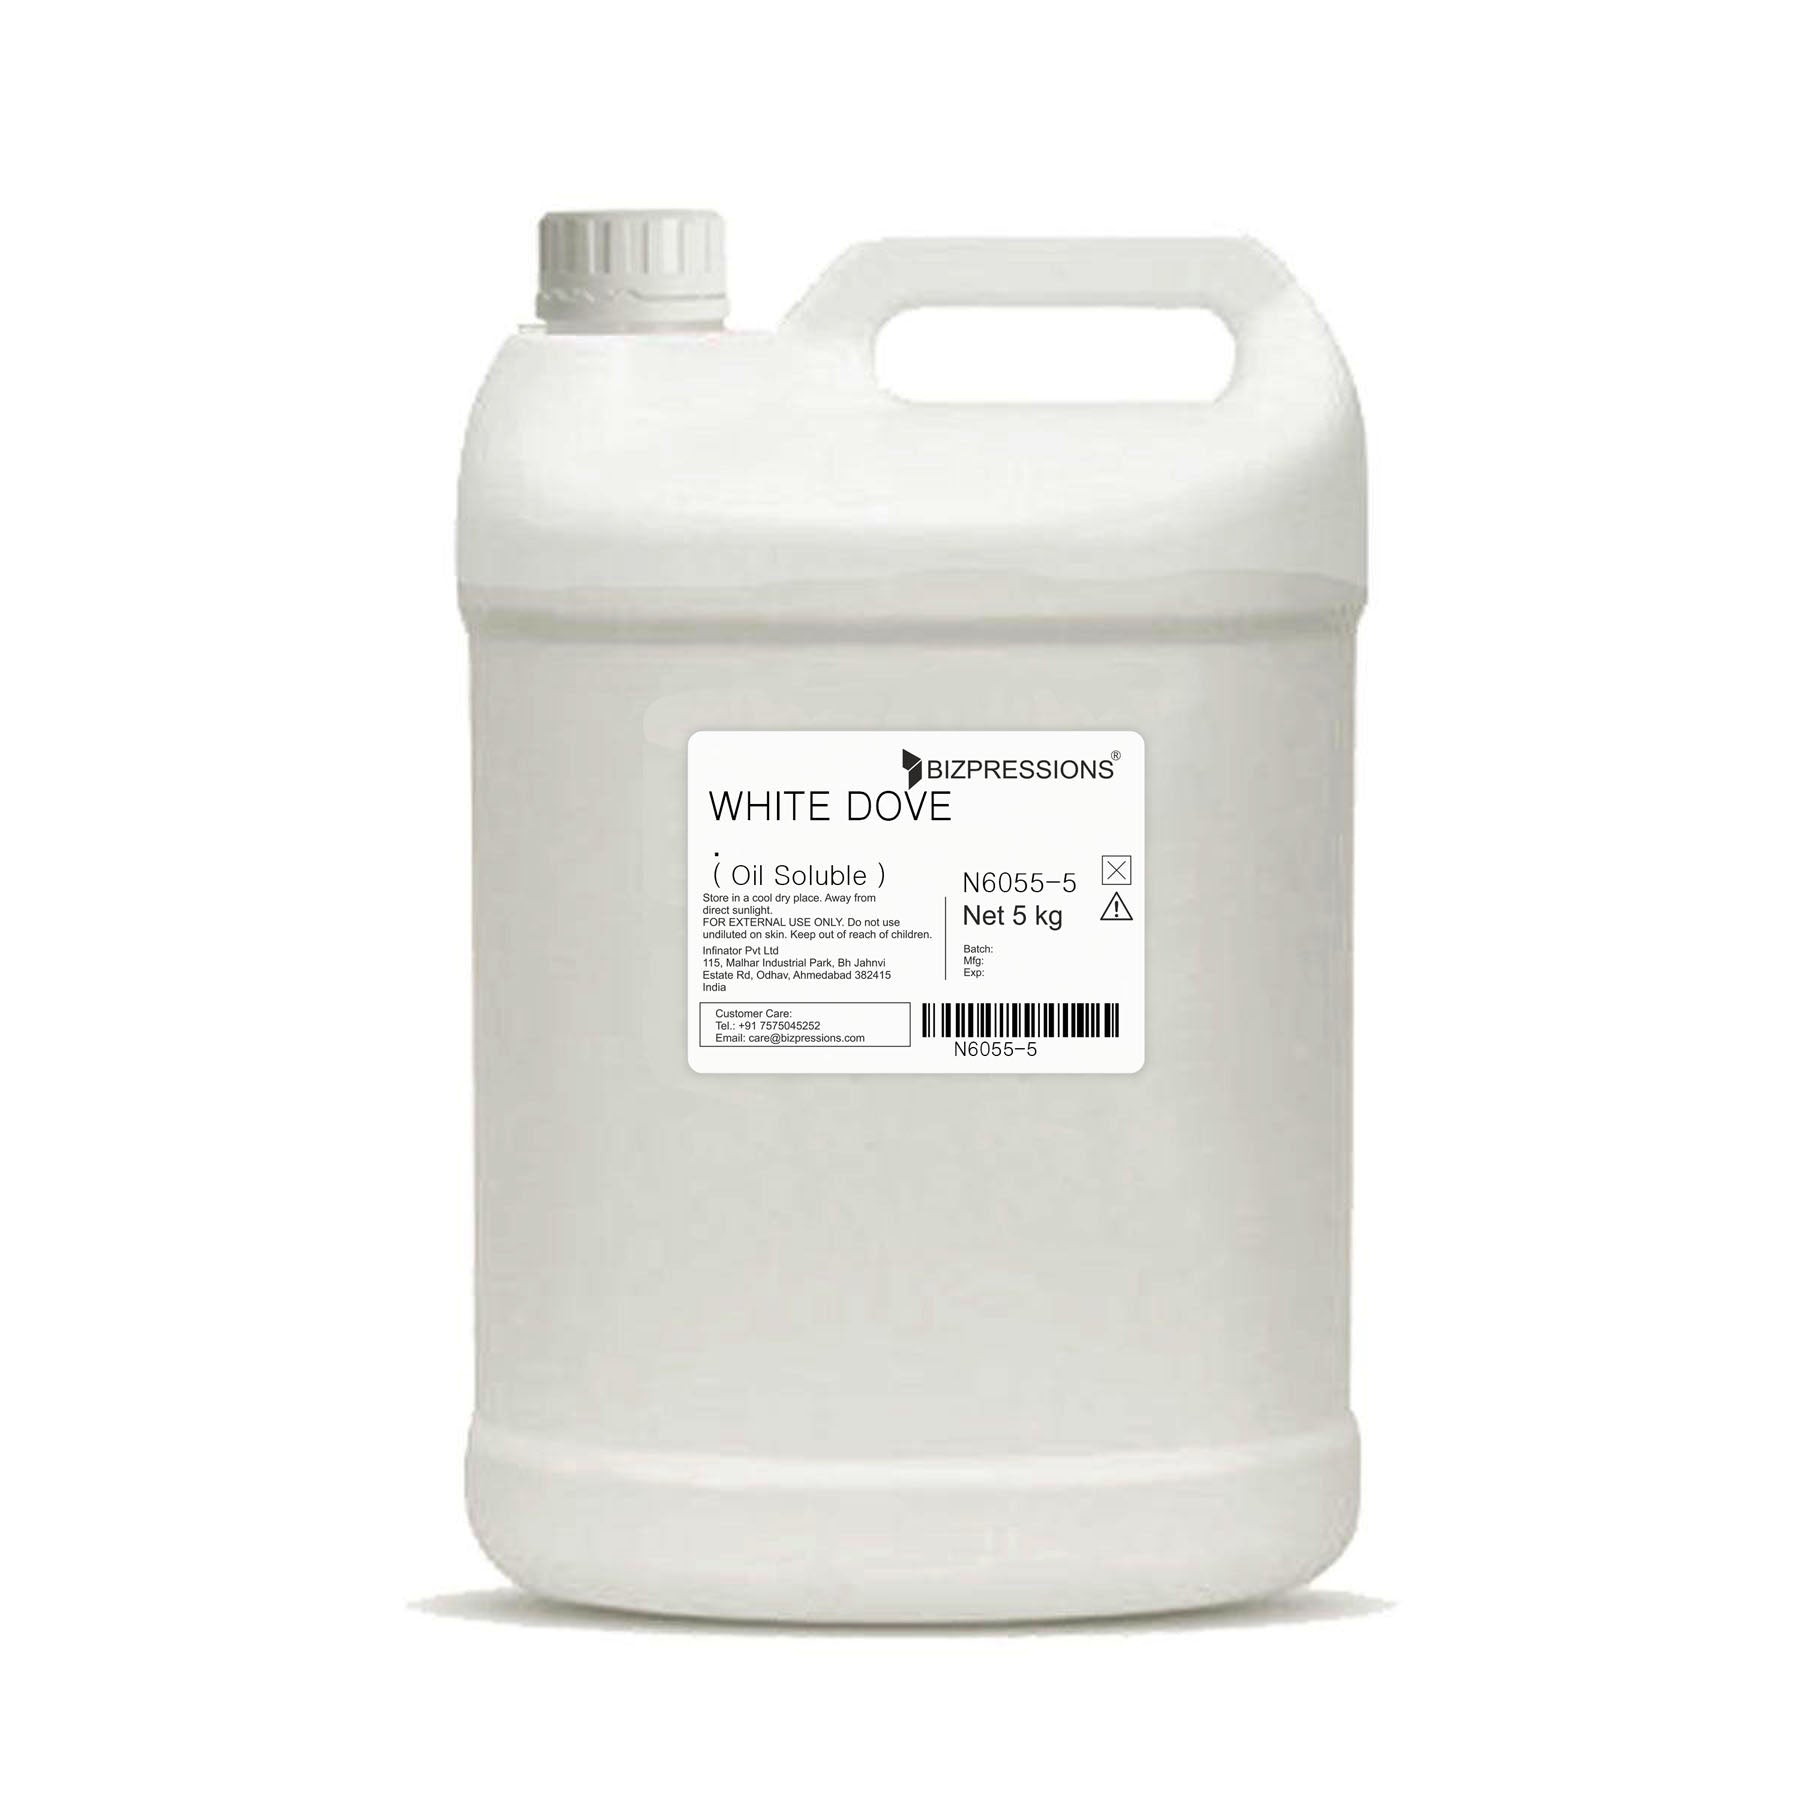 WHITE DOVE - Fragrance ( Oil Soluble ) - 5 kg